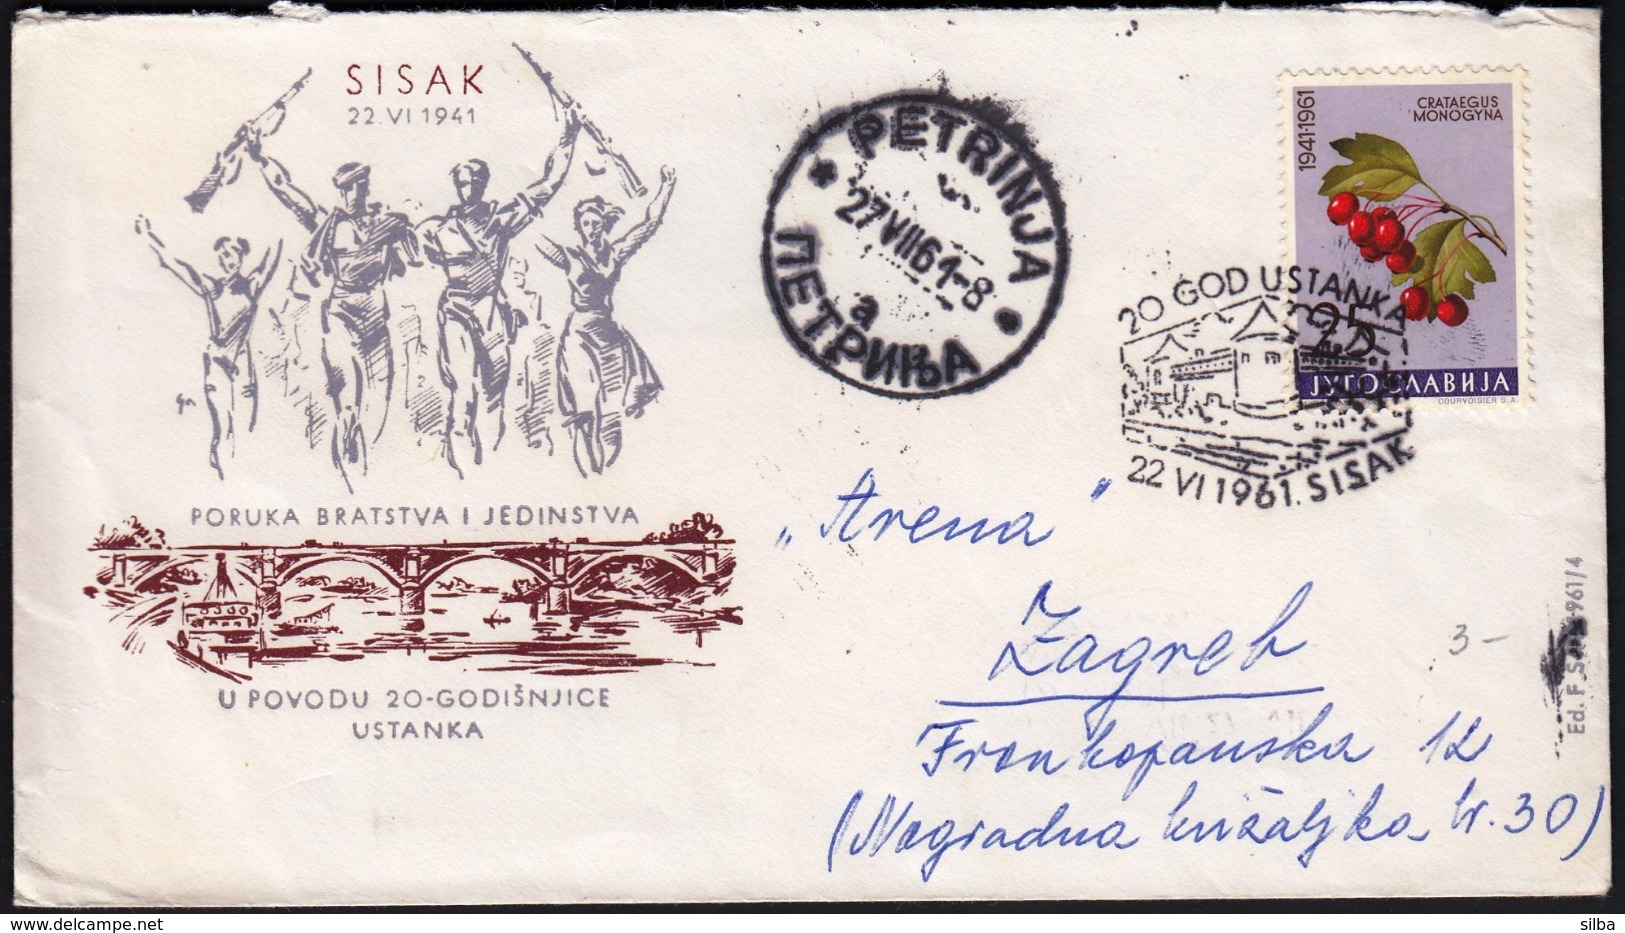 Yugoslavia Croatia Petrinja 1961 / 20th Anniversary Of Sisak Anti-Fascist Uprising - Militaria